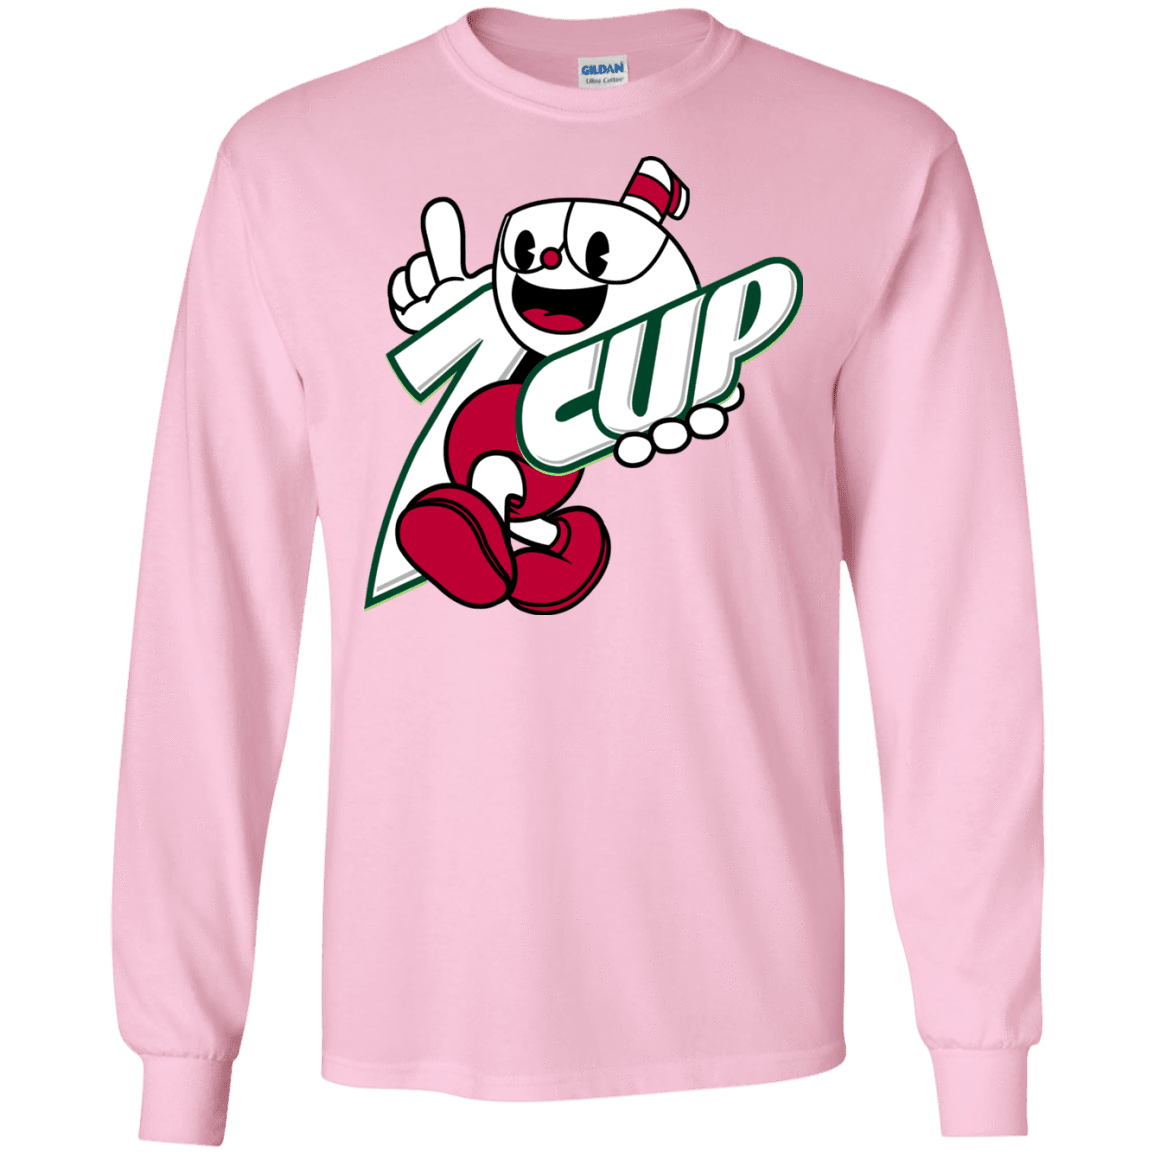 T-Shirts Light Pink / S 1cup Men's Long Sleeve T-Shirt